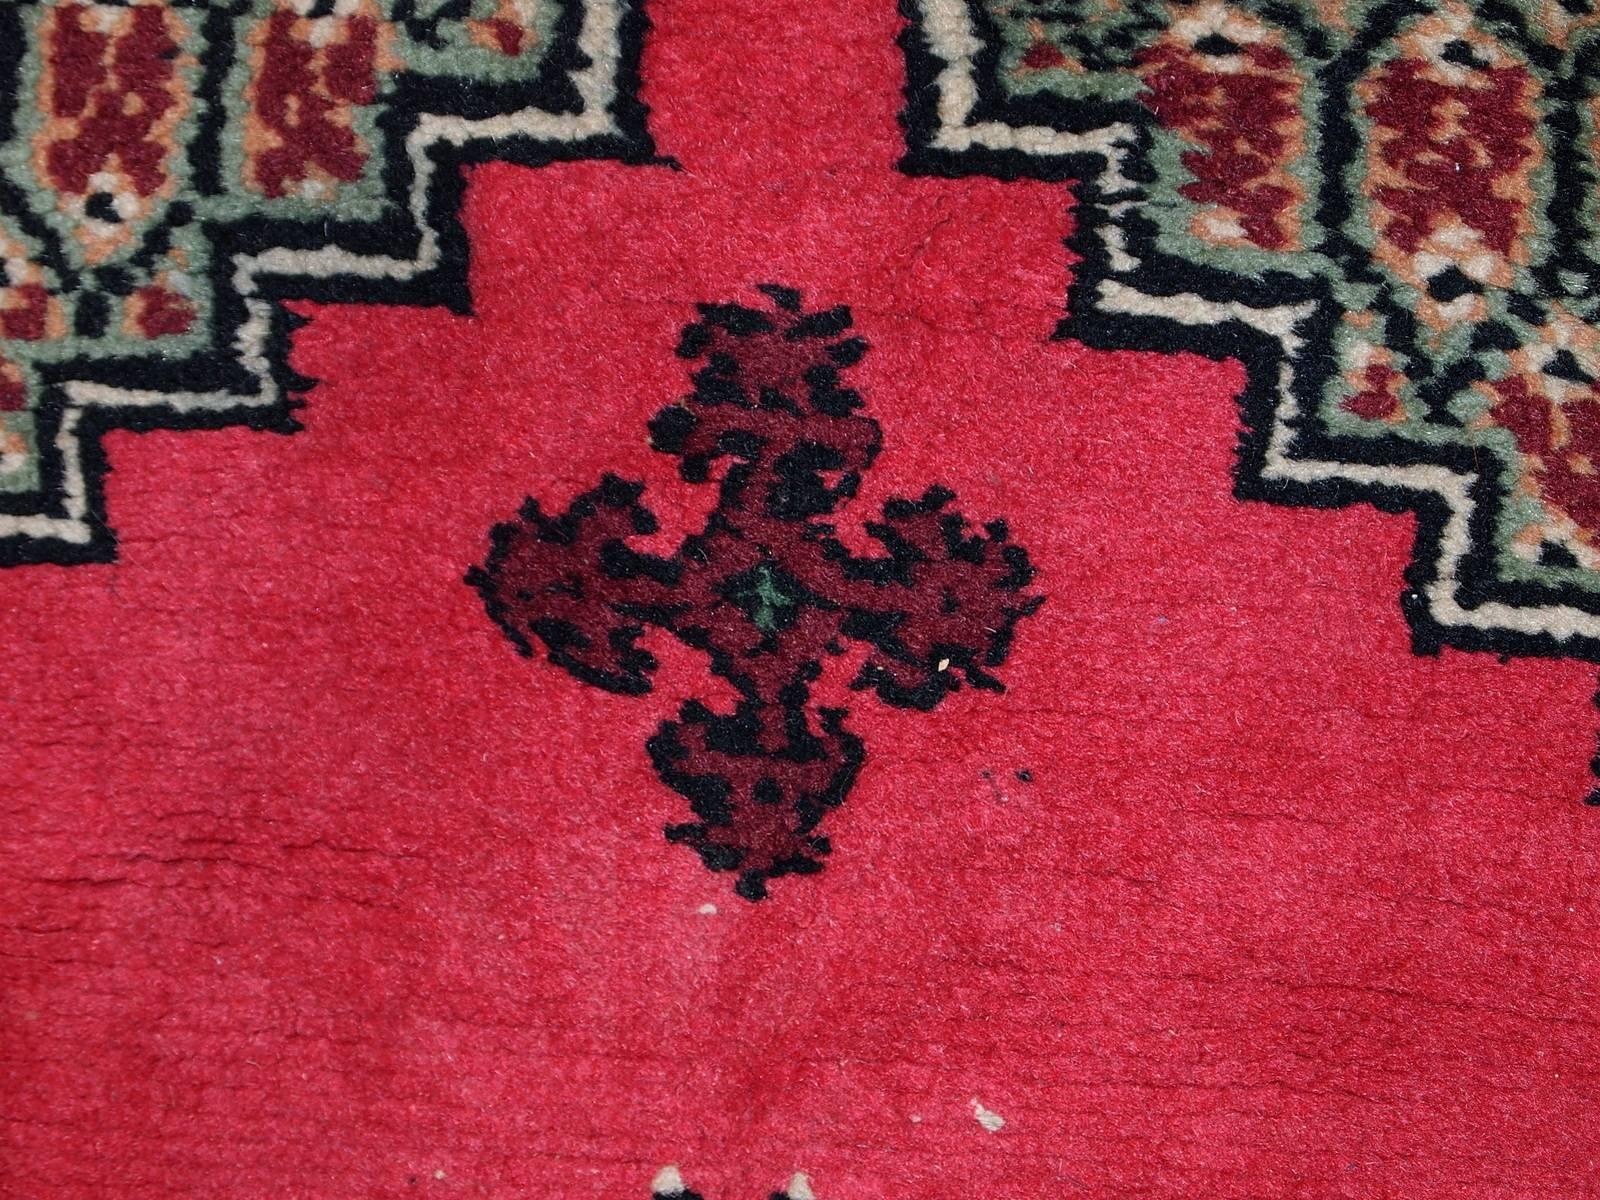 1970s carpet patterns